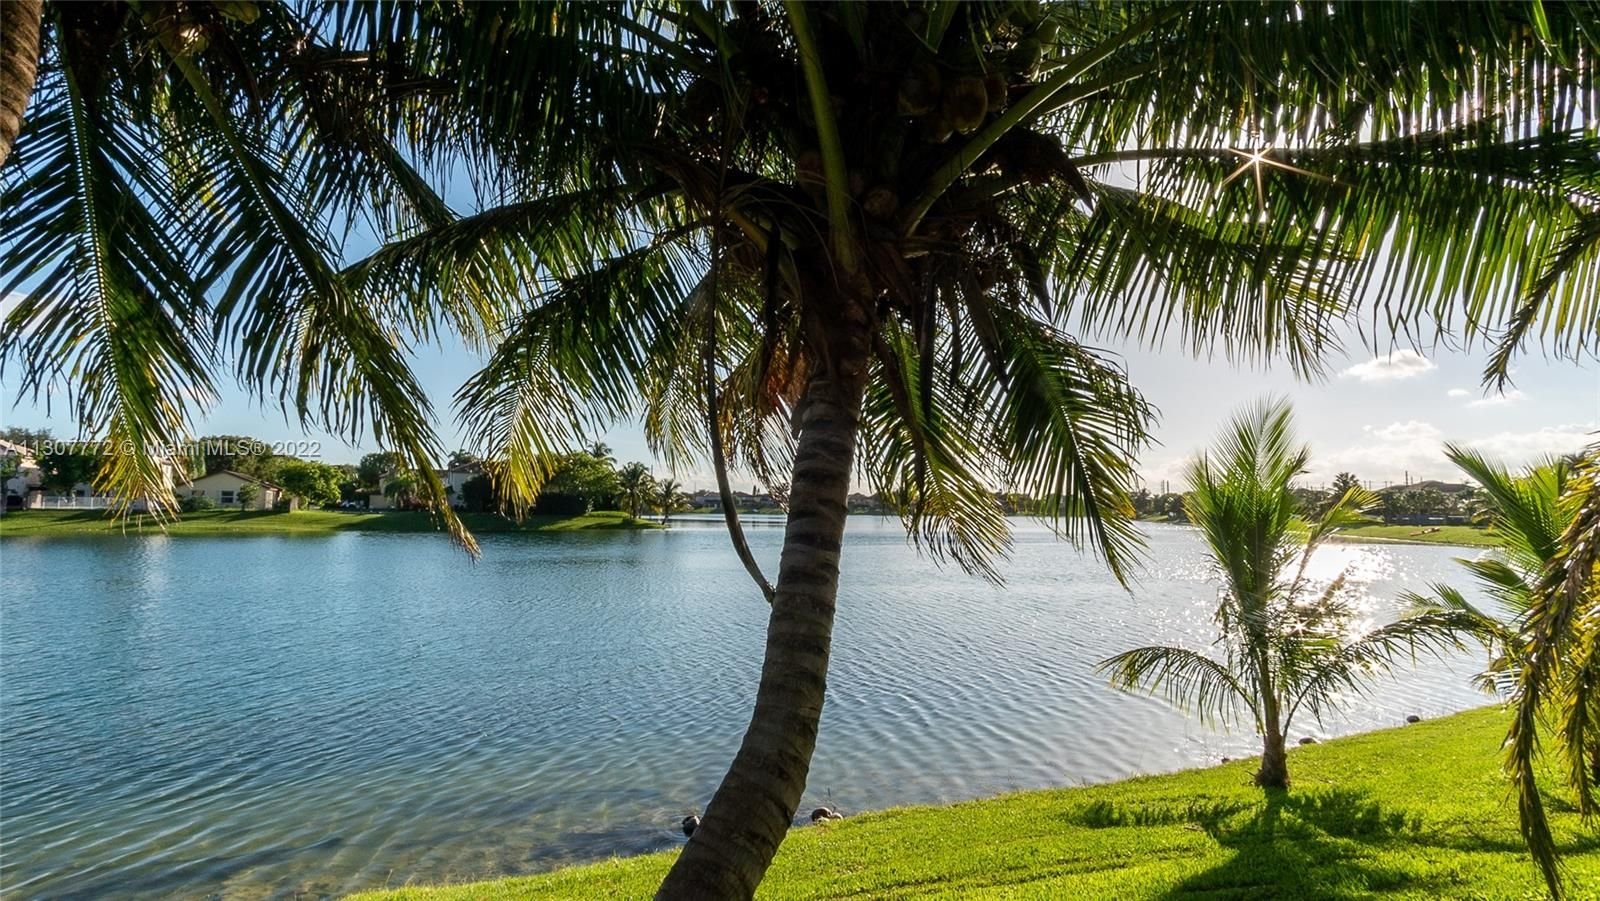 Real estate property located at 12210 135th Ter, Miami-Dade County, Miami, FL